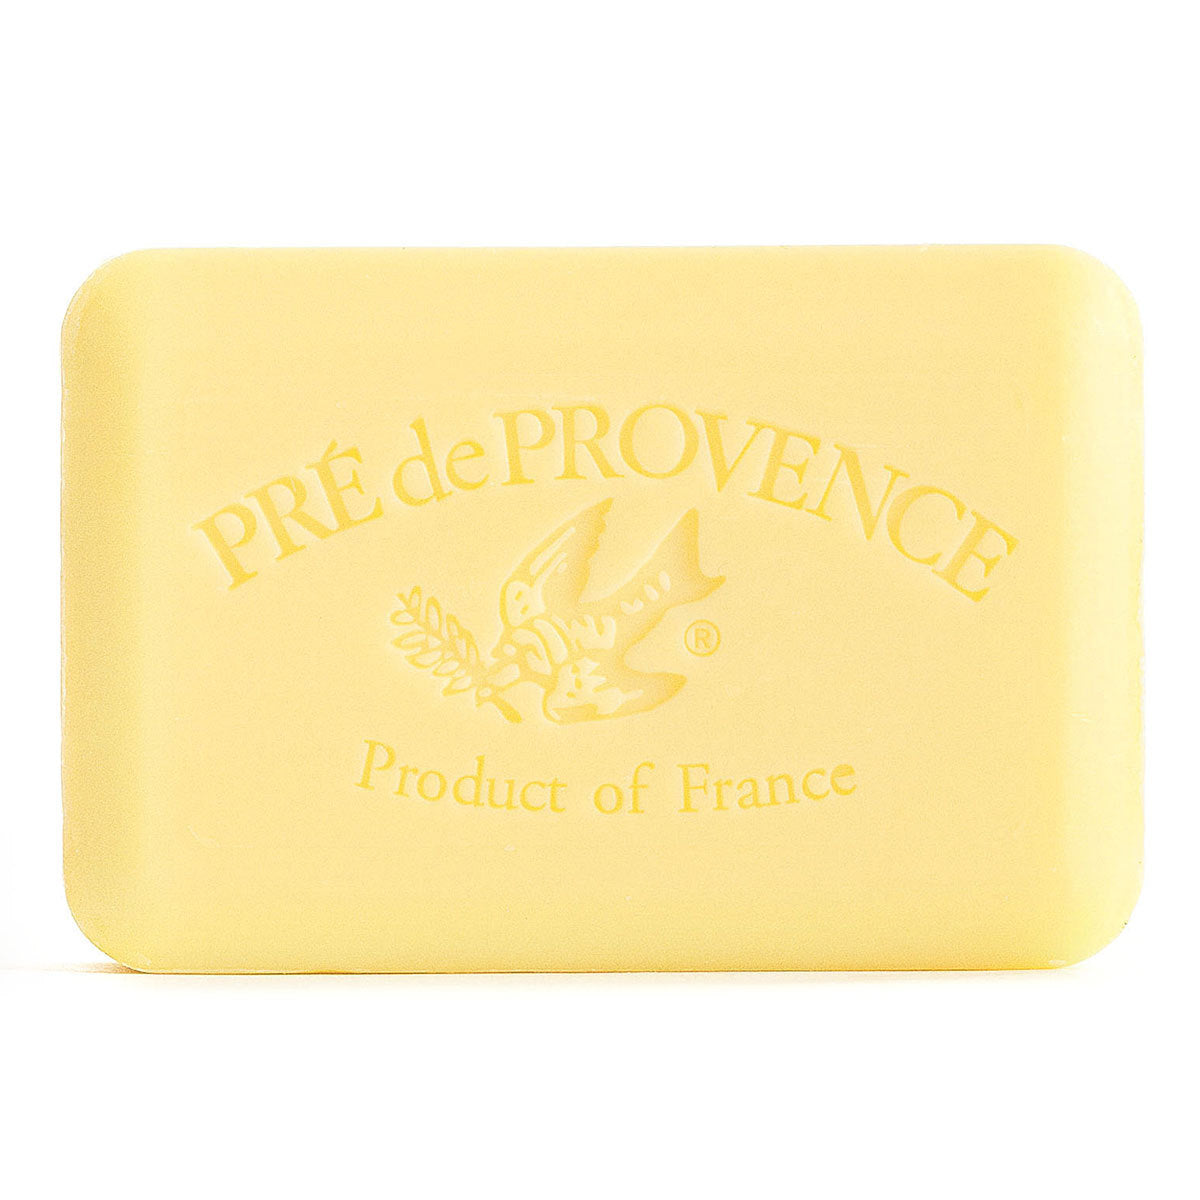 Primary image of Freesia Bar Soap